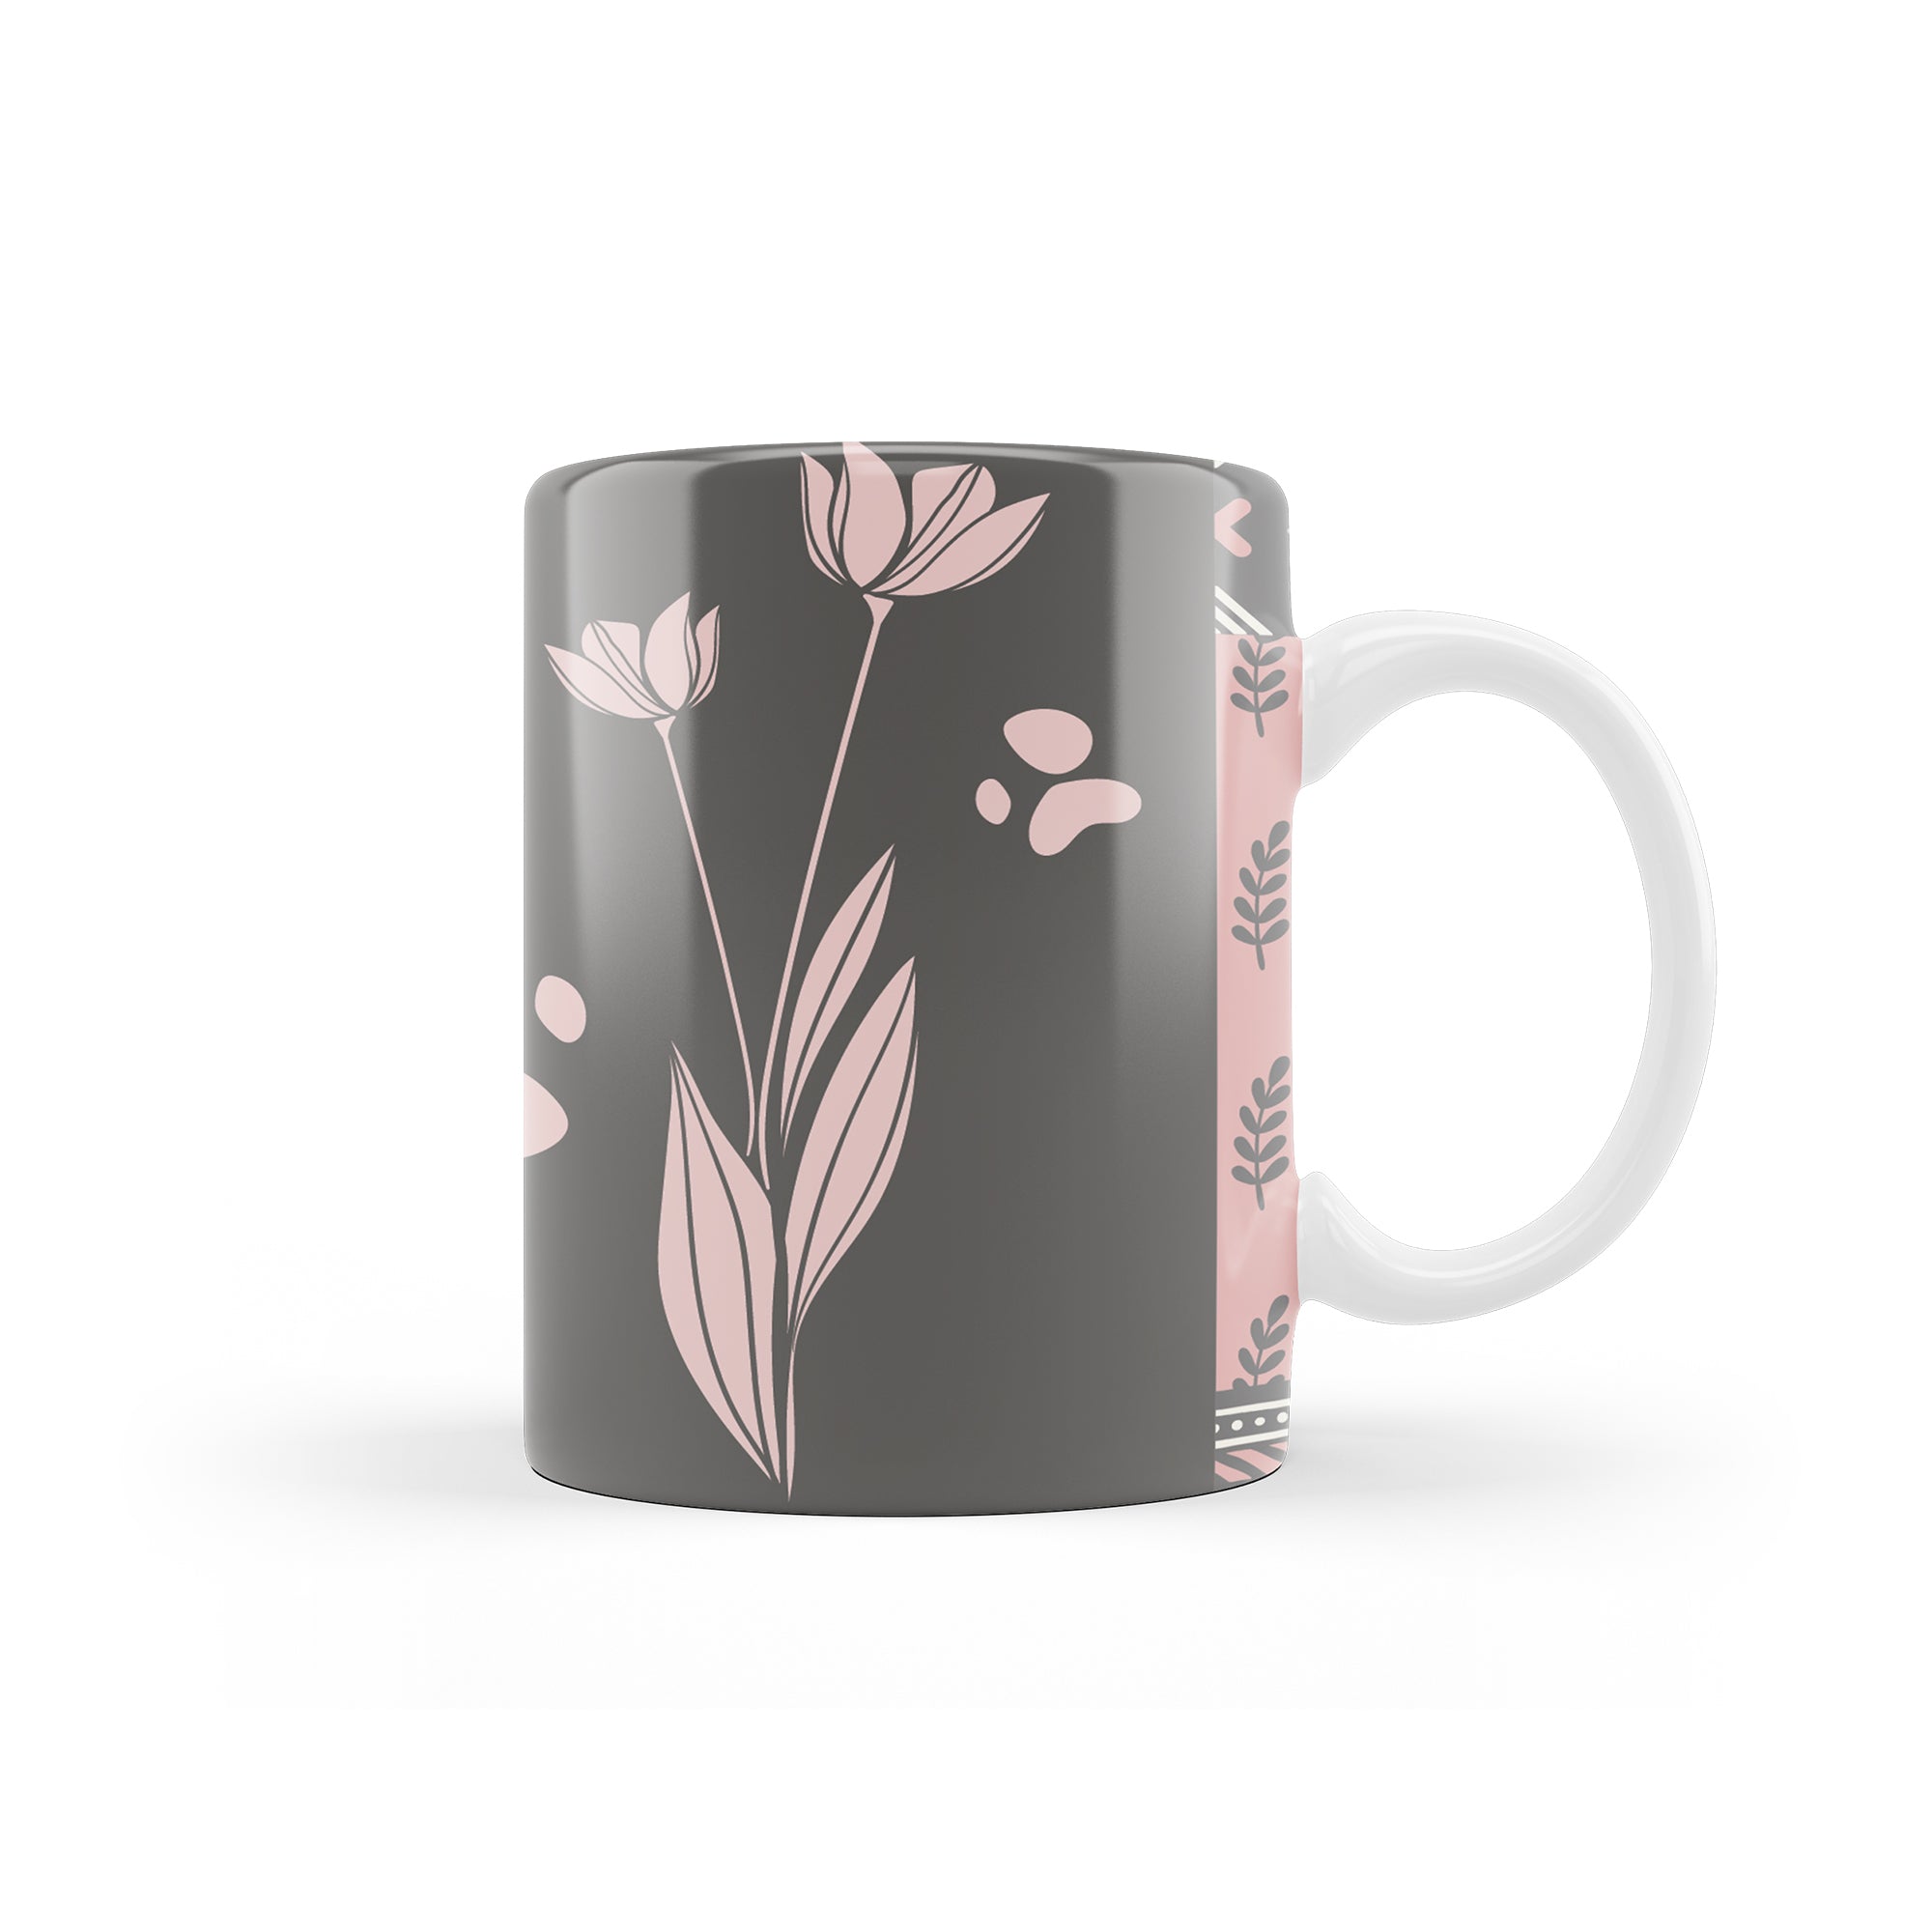 Petals in Black and Pink mug